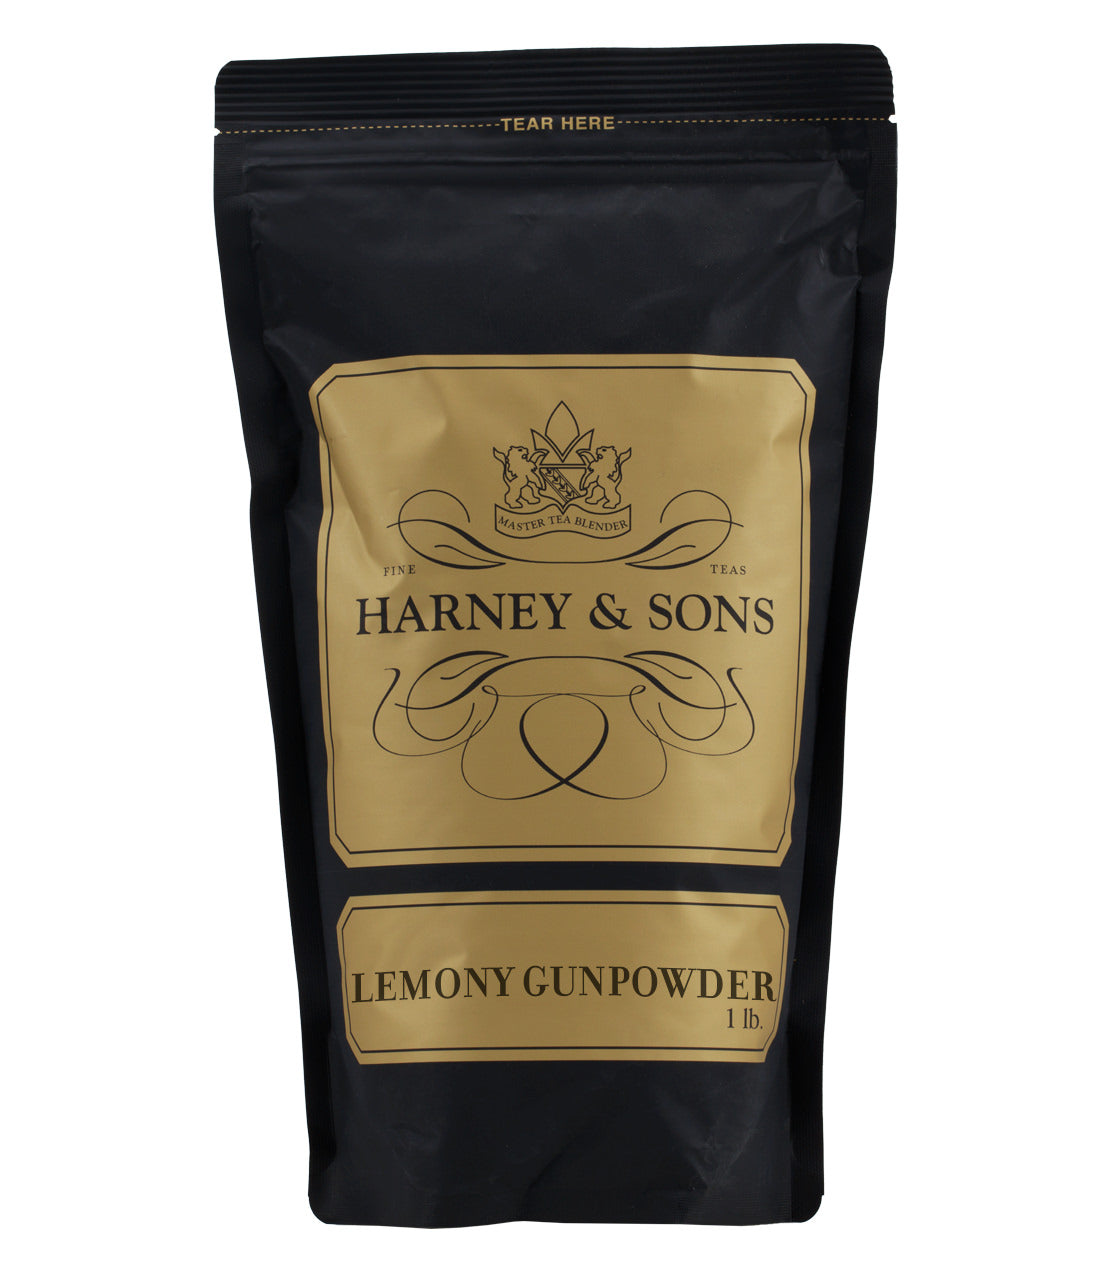 Lemony Gunpowder - Loose 1 lb. Bag - Harney & Sons Fine Teas